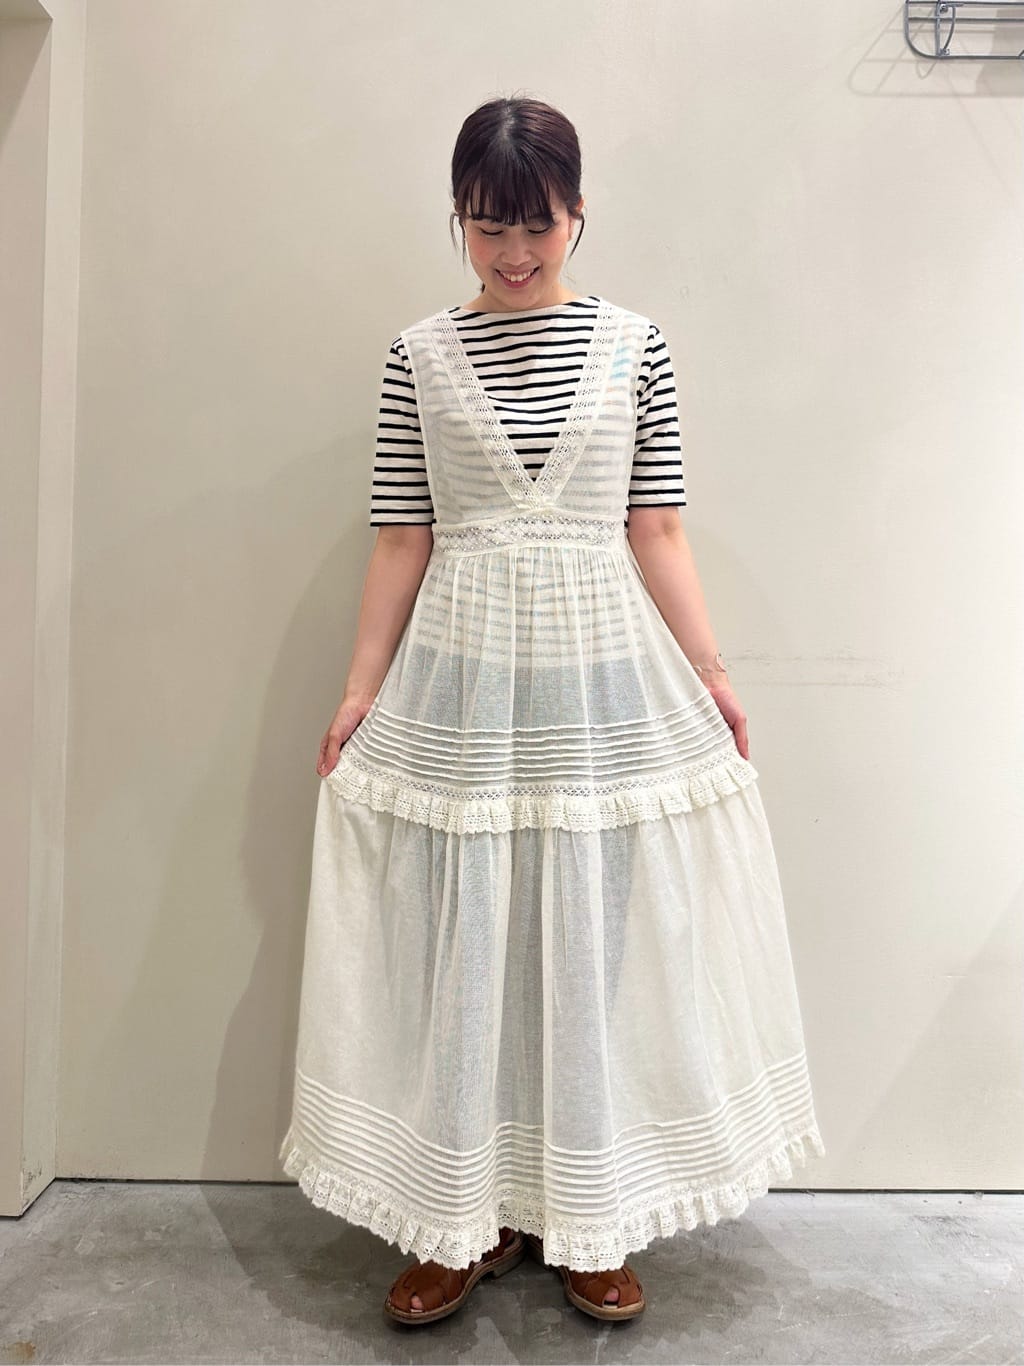 Dot and Stripes CHILD WOMAN CHILD WOMAN , PAR ICI 新宿ミロード 身長：168cm 2023.05.18